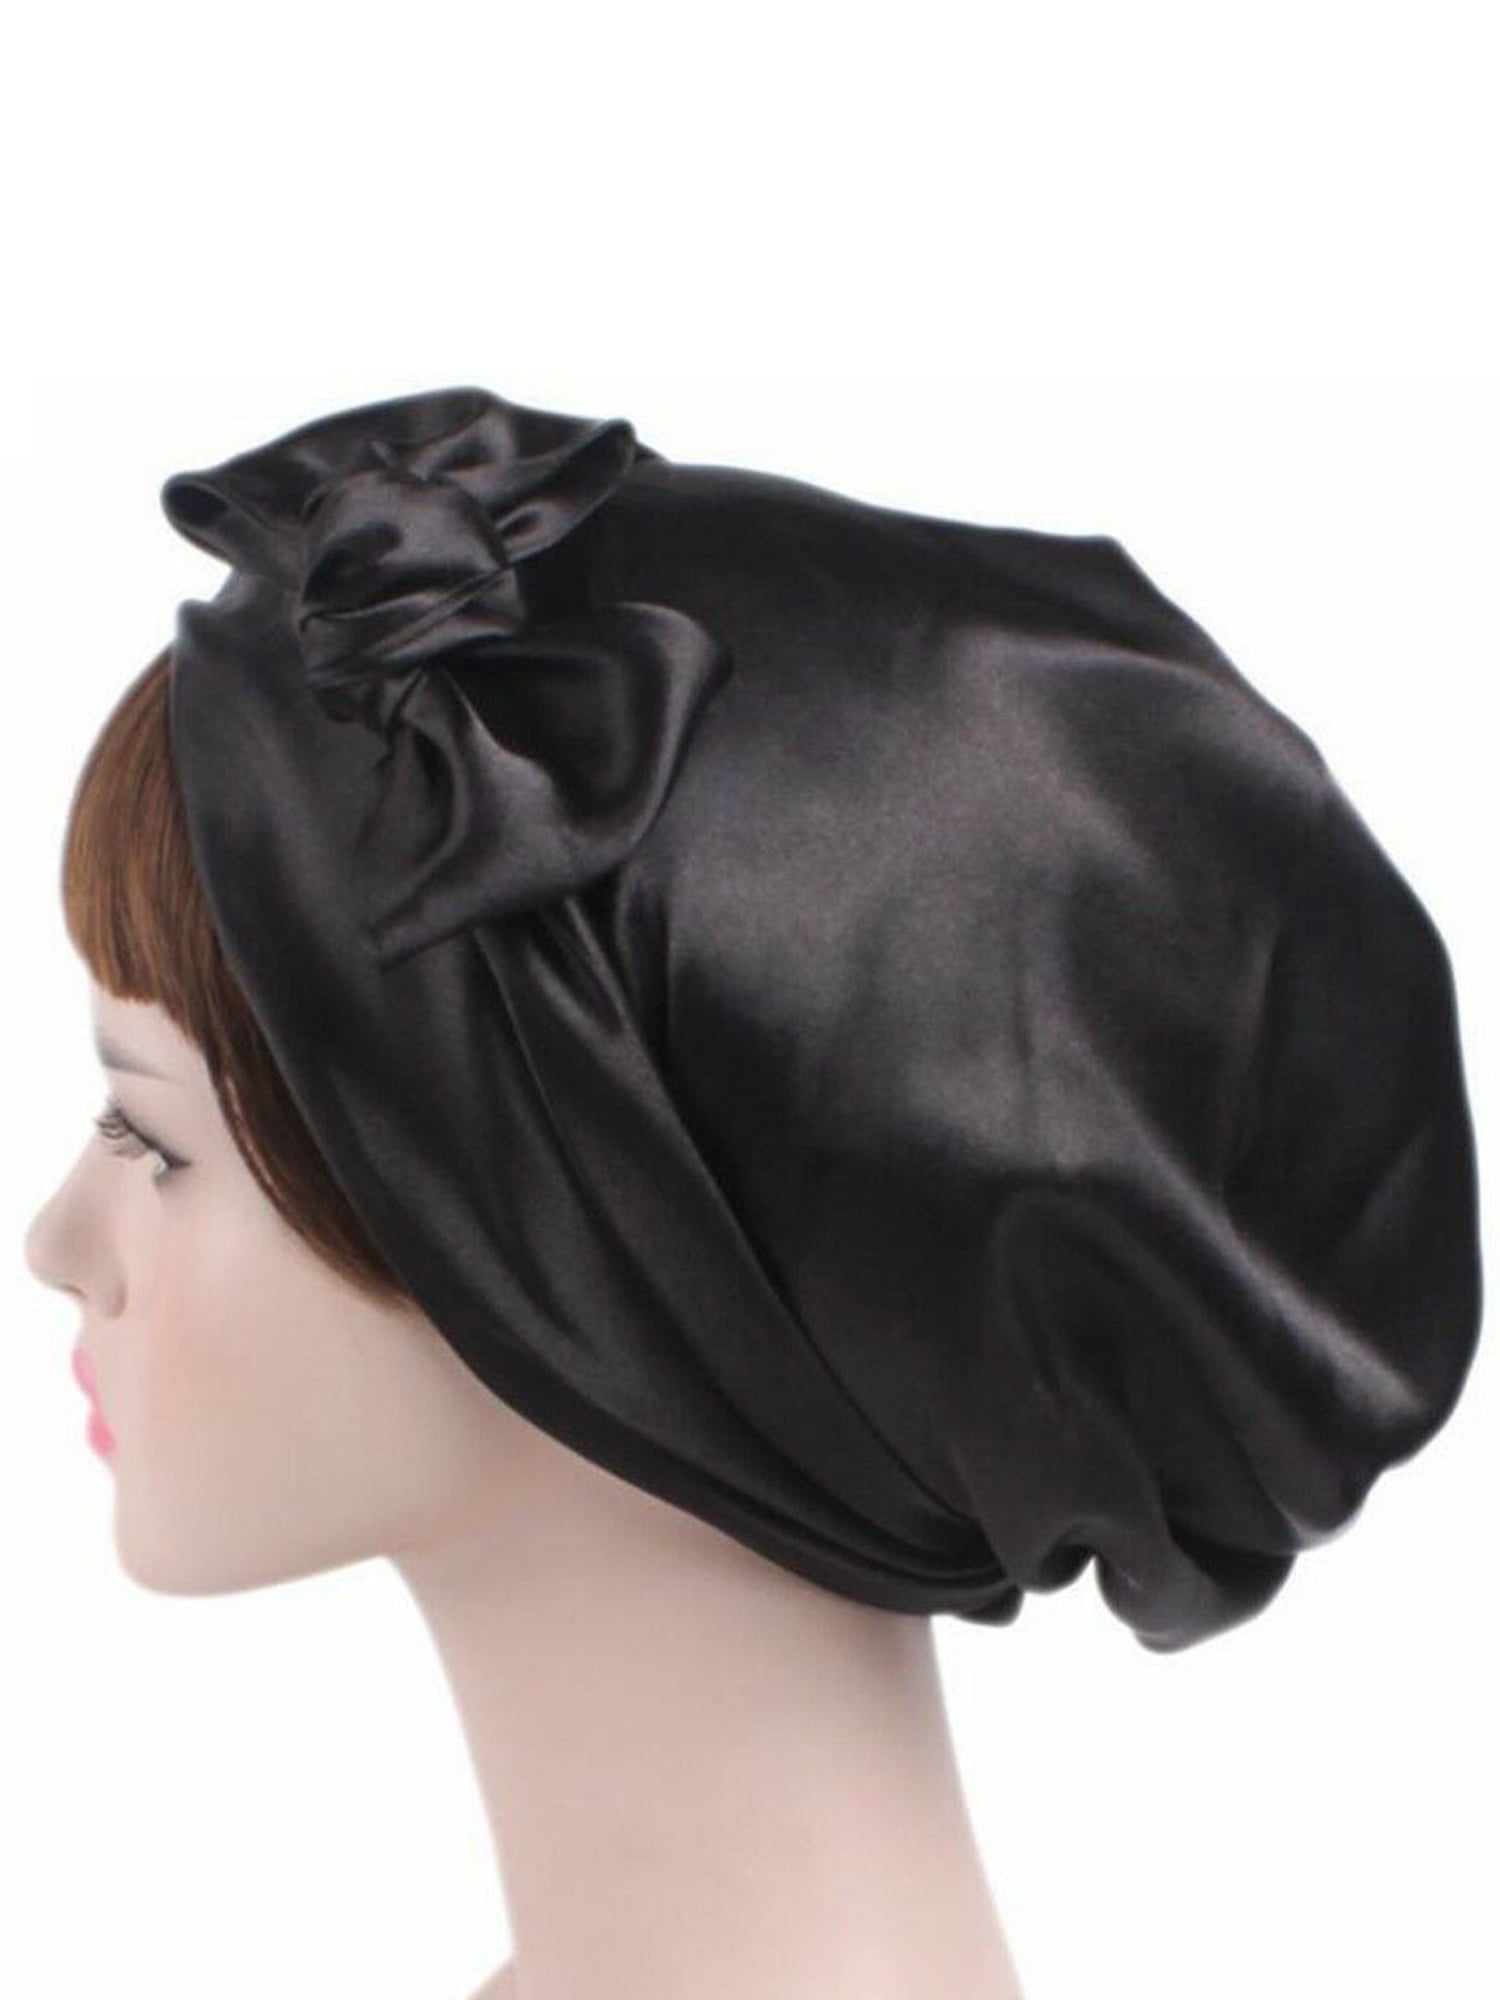 Women Muslim Turban Sleep Hat Bonnet Hat Sequins Headscarf Head Cover Night Cap